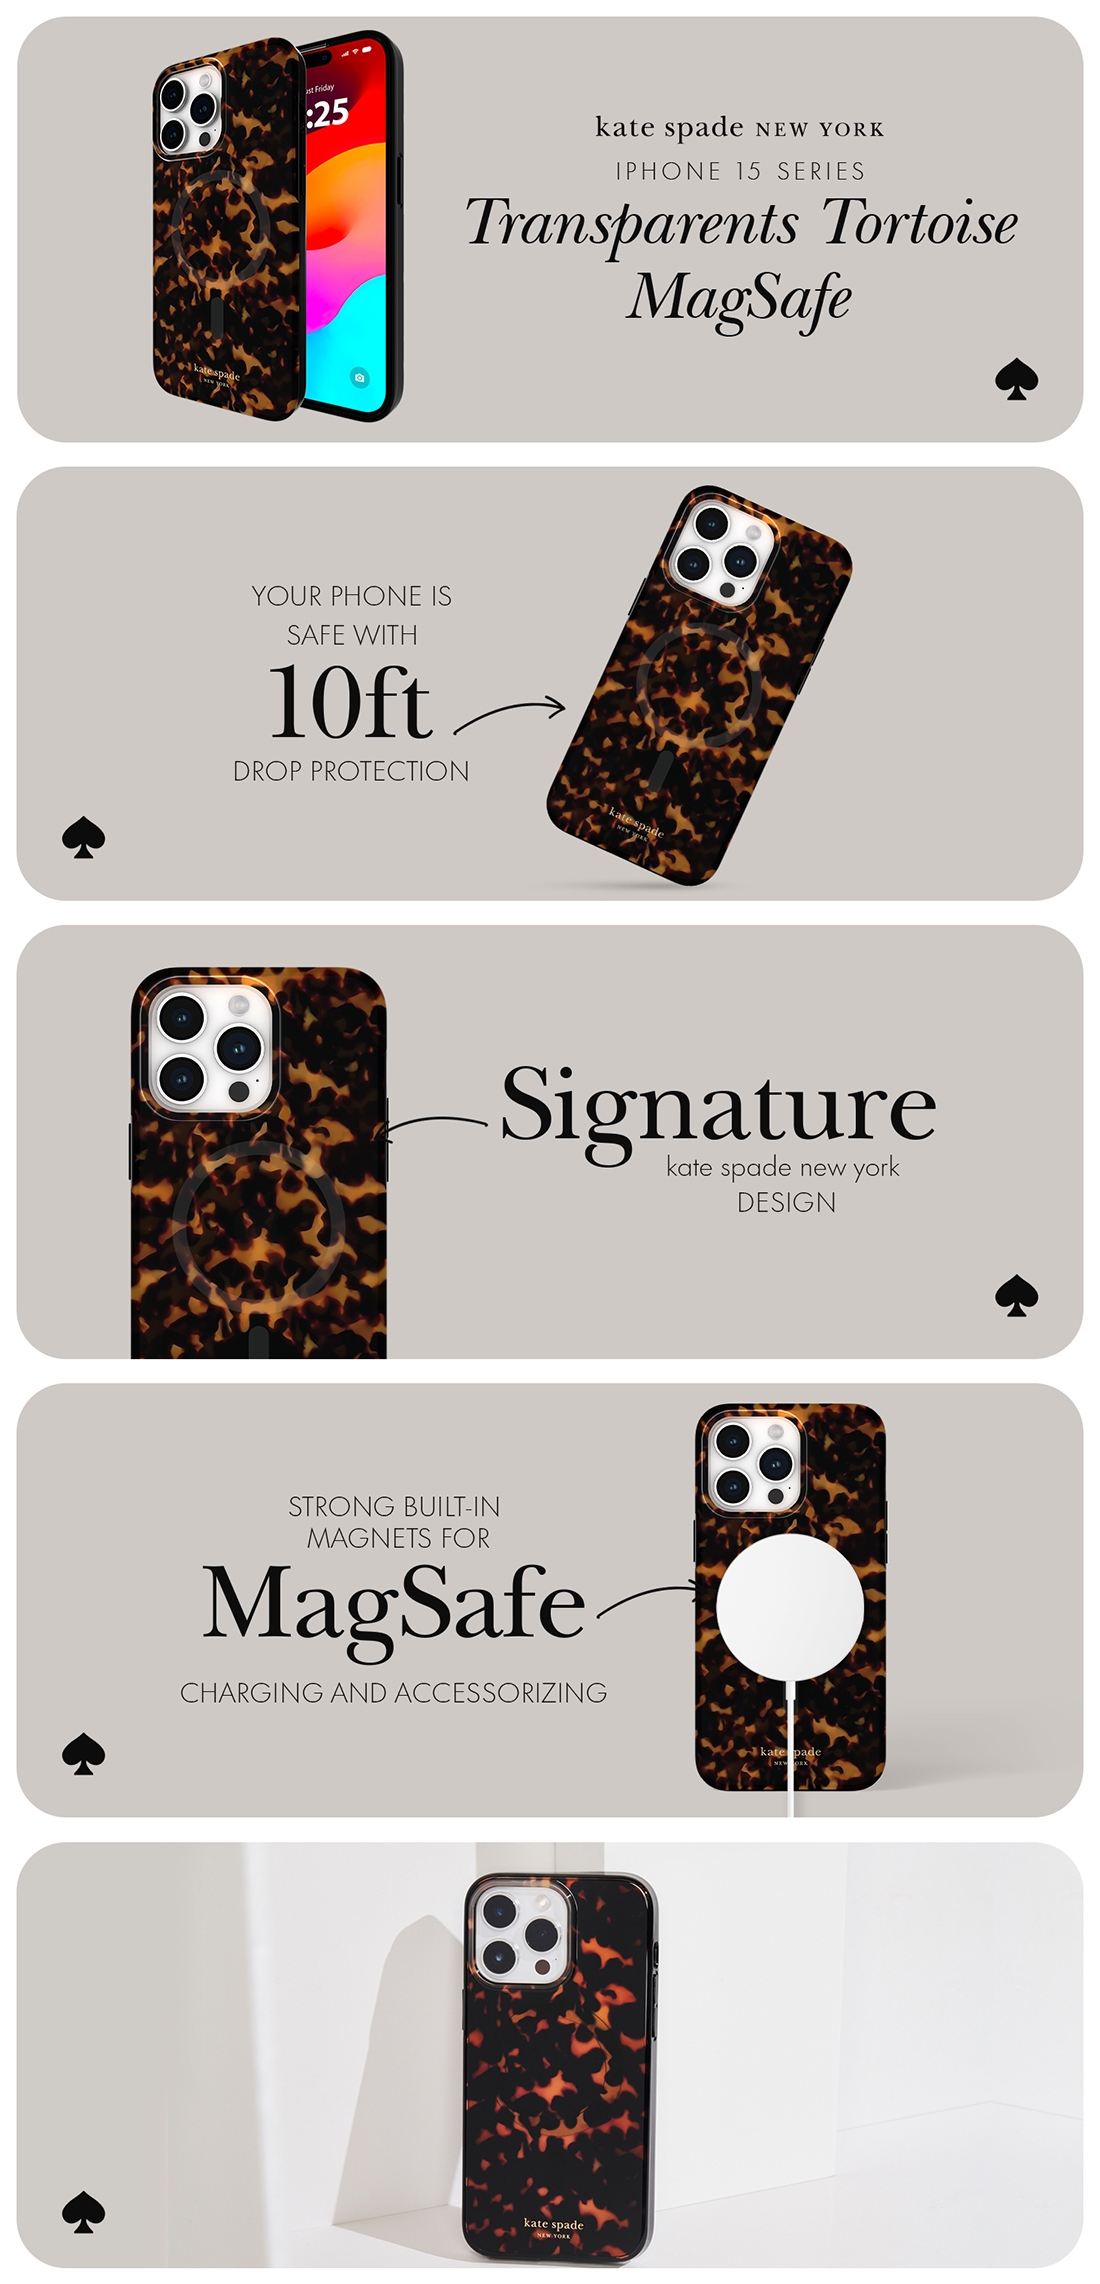 Kate Spade Tortoise MagSafe - iPhone 15